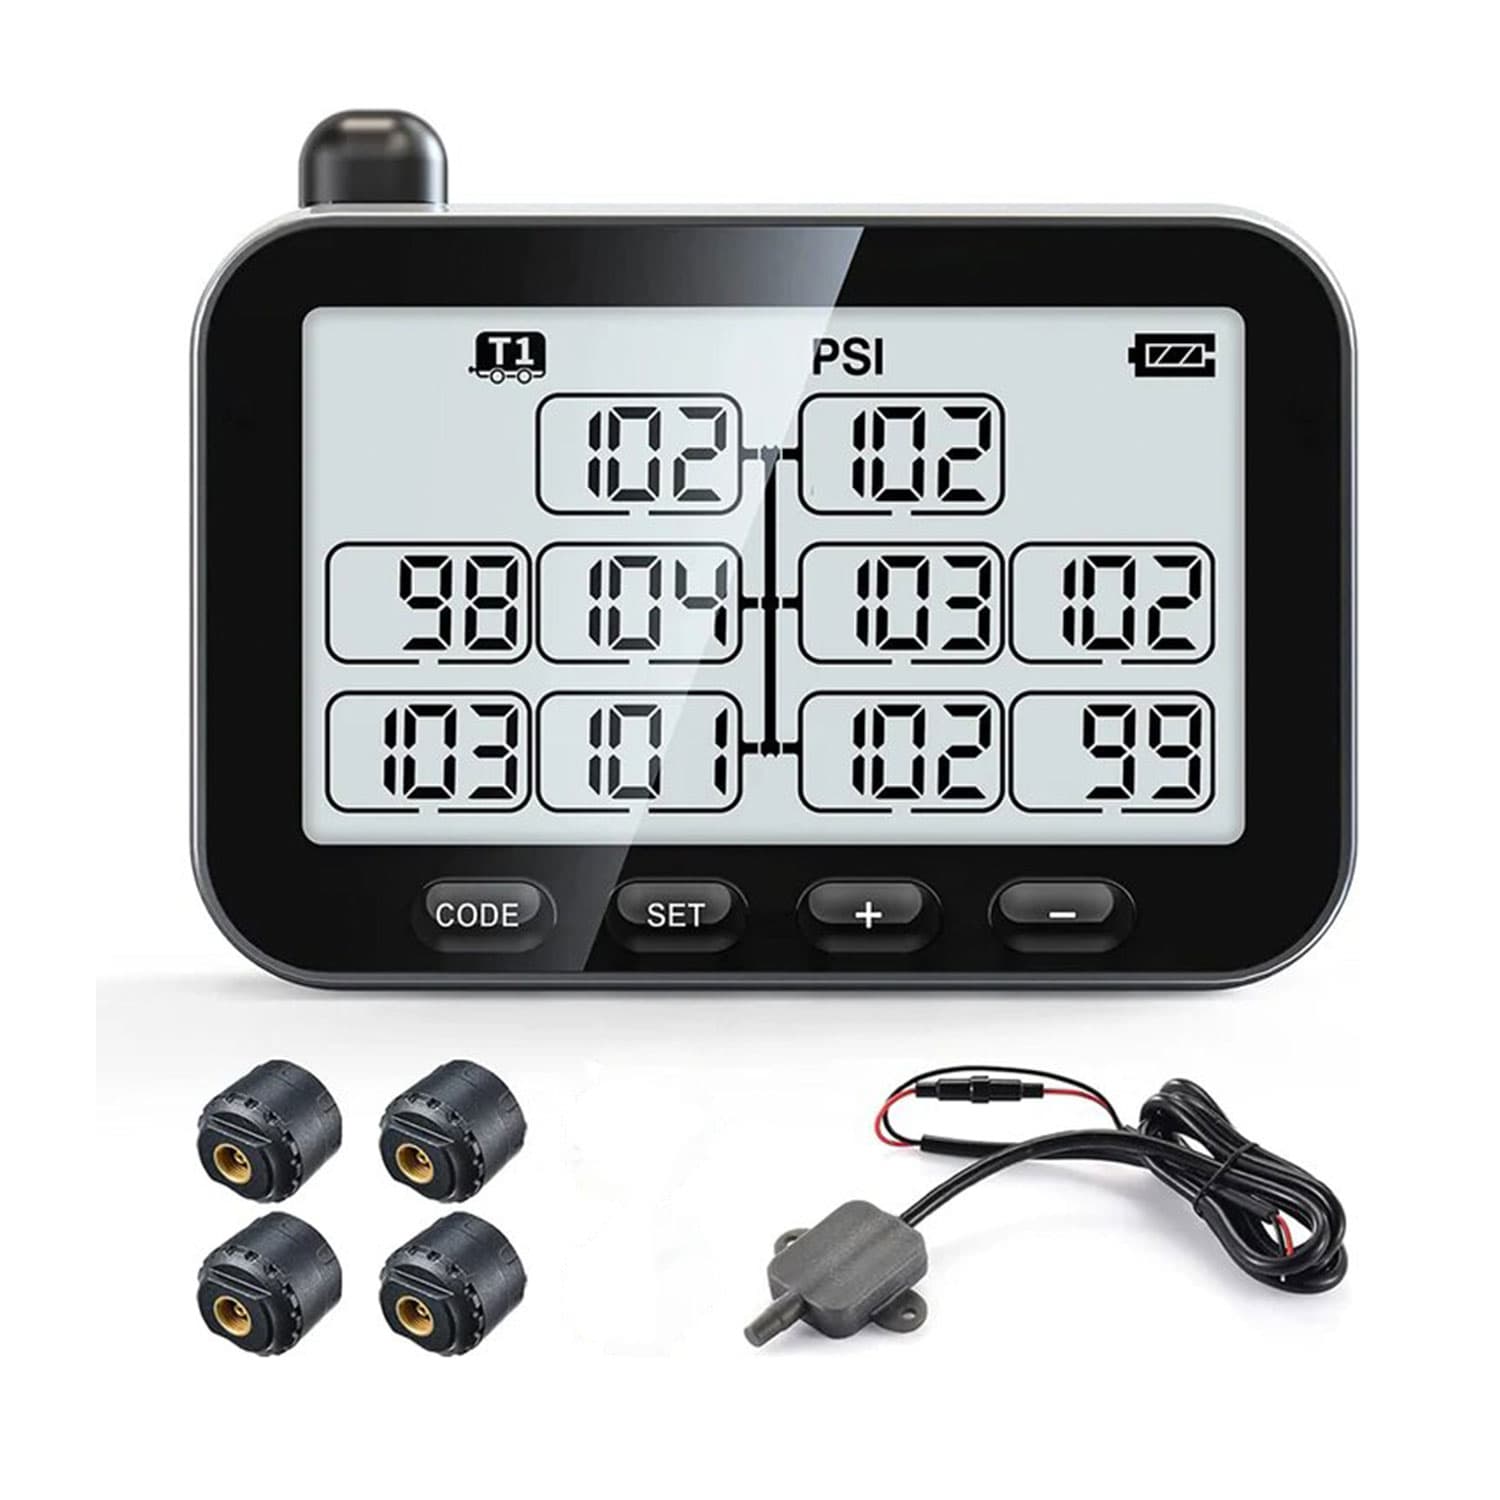 8001-EN Temperature Humidity Displaying Alarm Clock with Dual